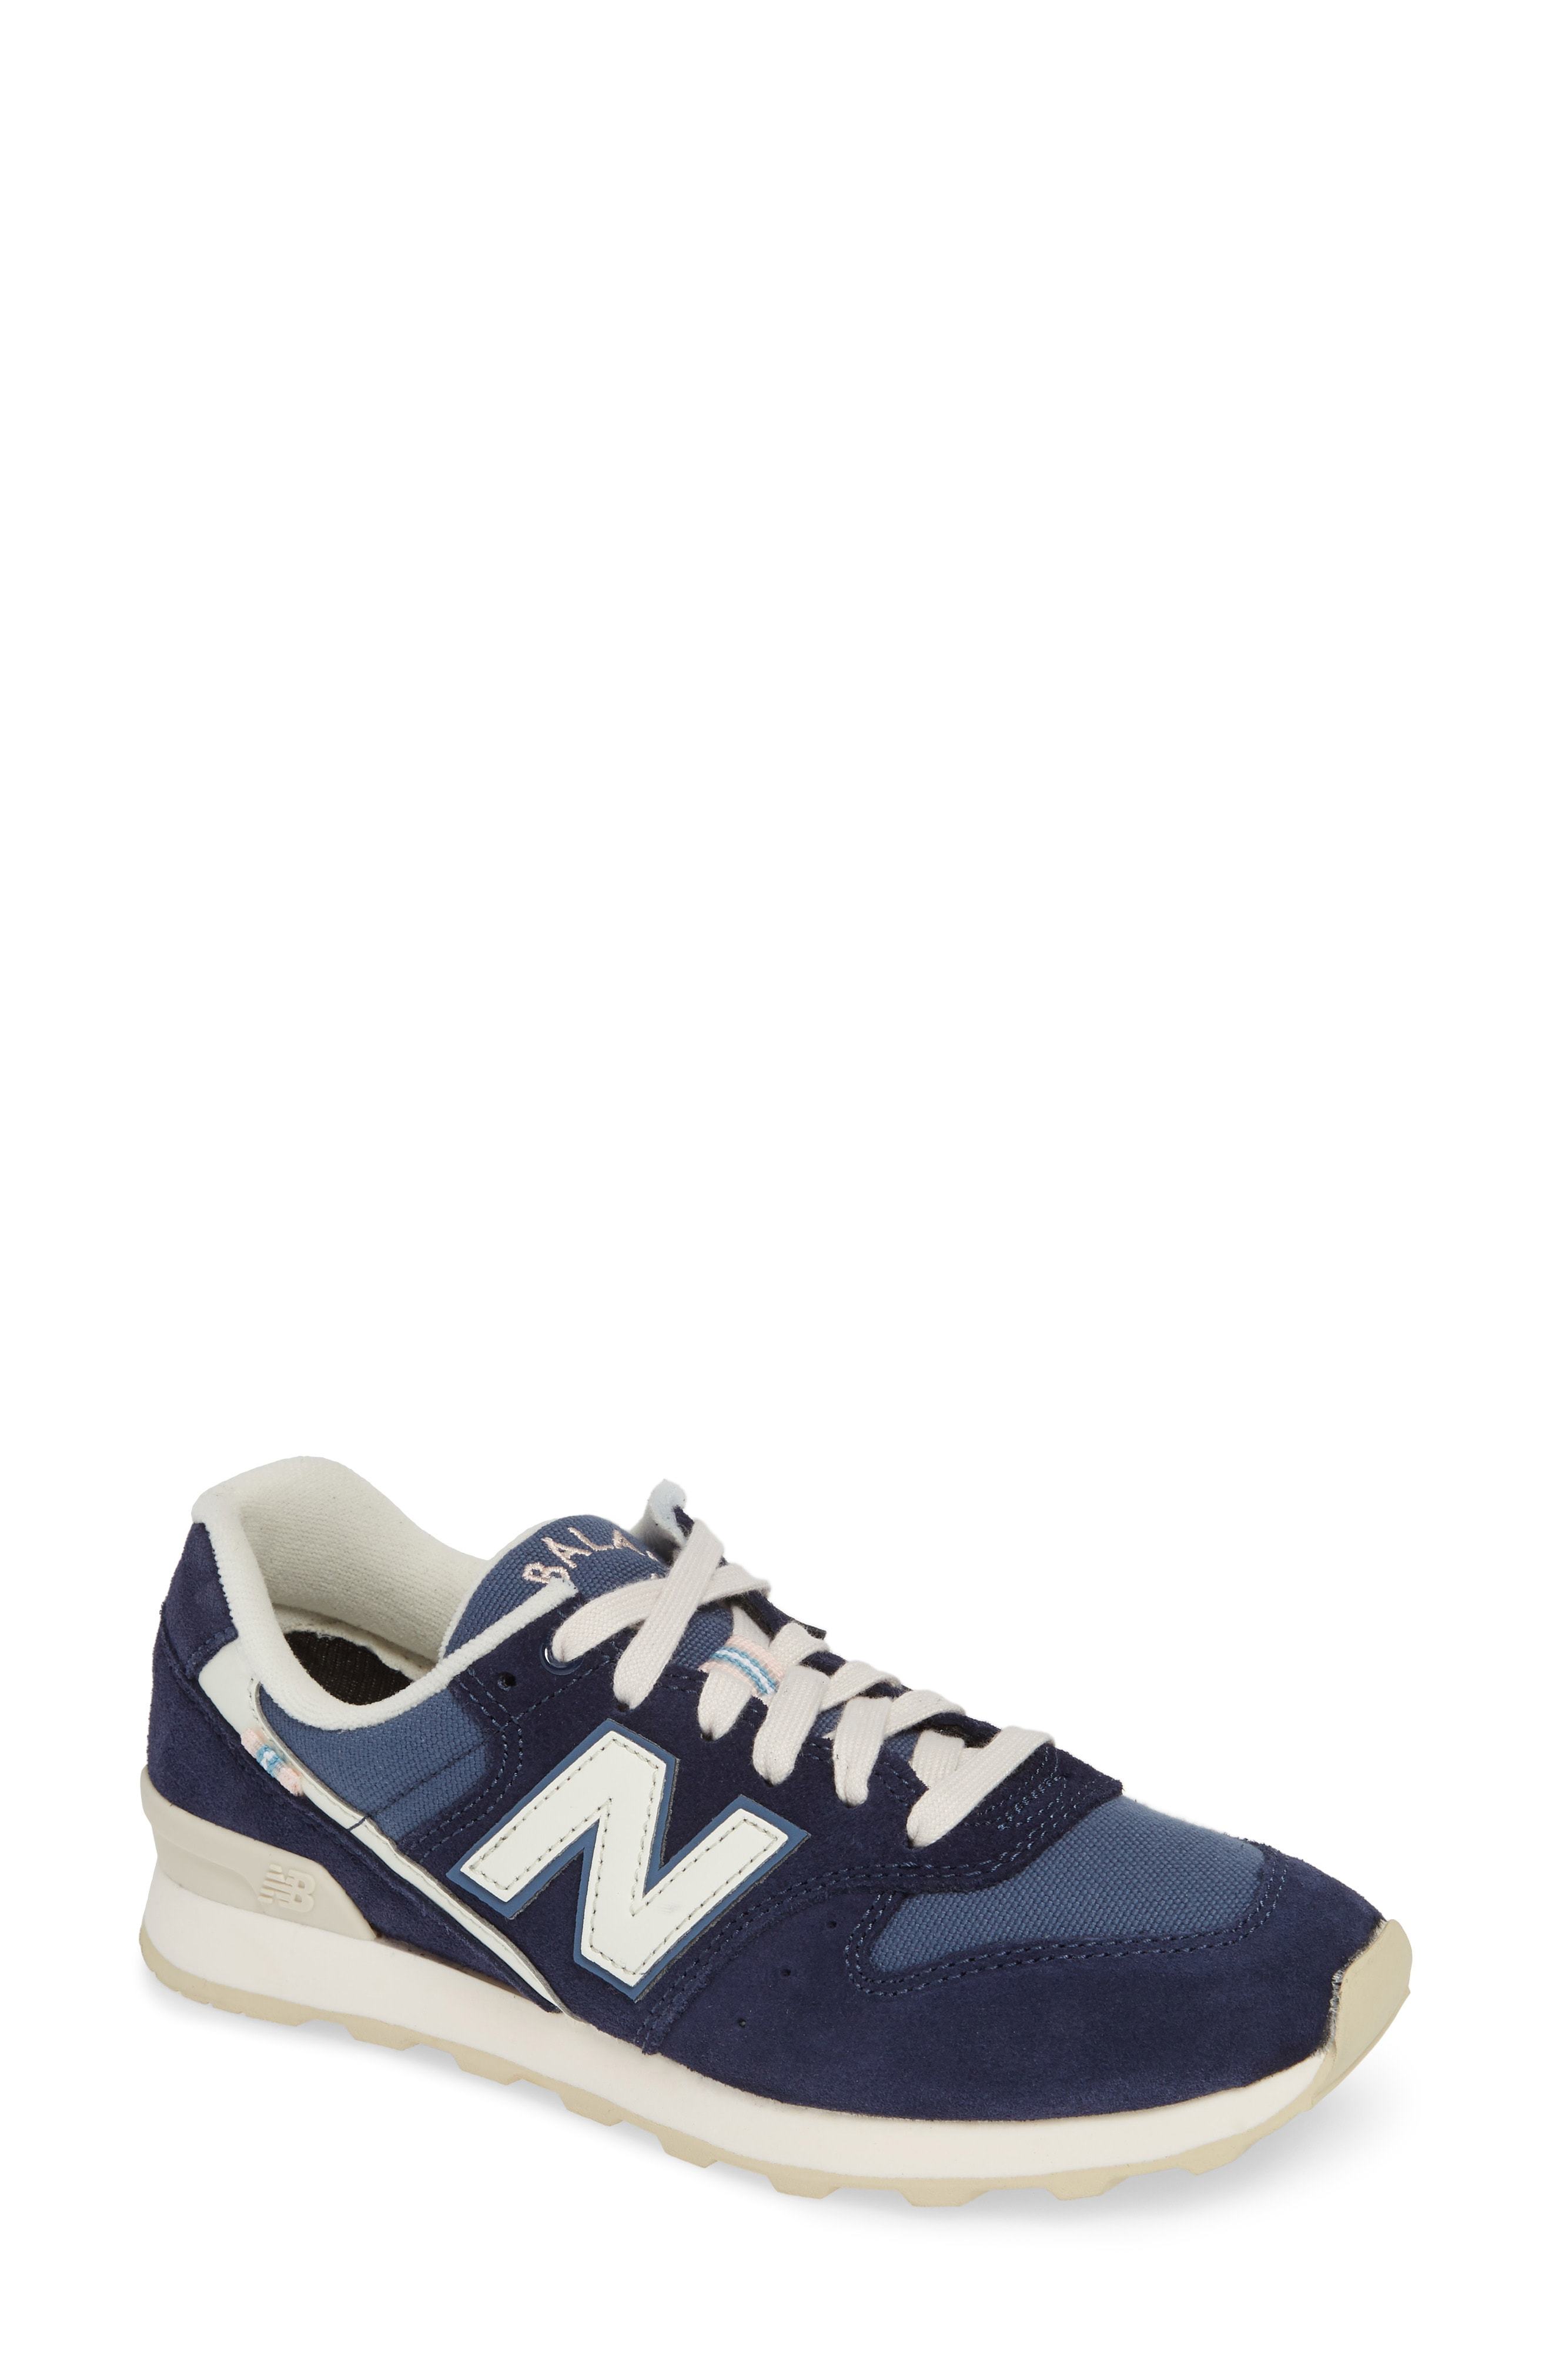 New Balance 696 Sneaker, $79 